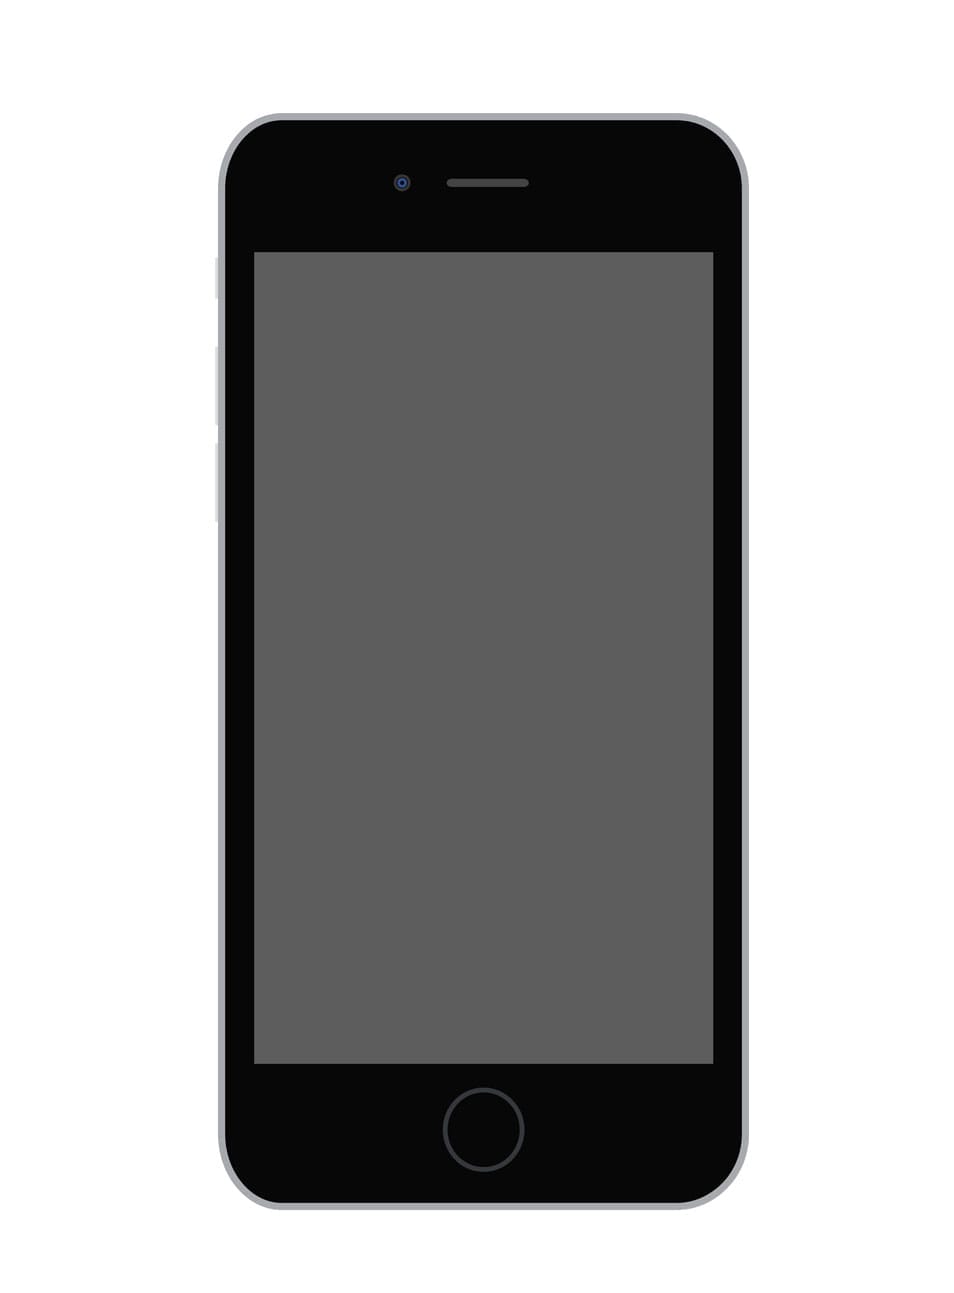 Flat iPhone 6 vector + iPhone sketch Mockup